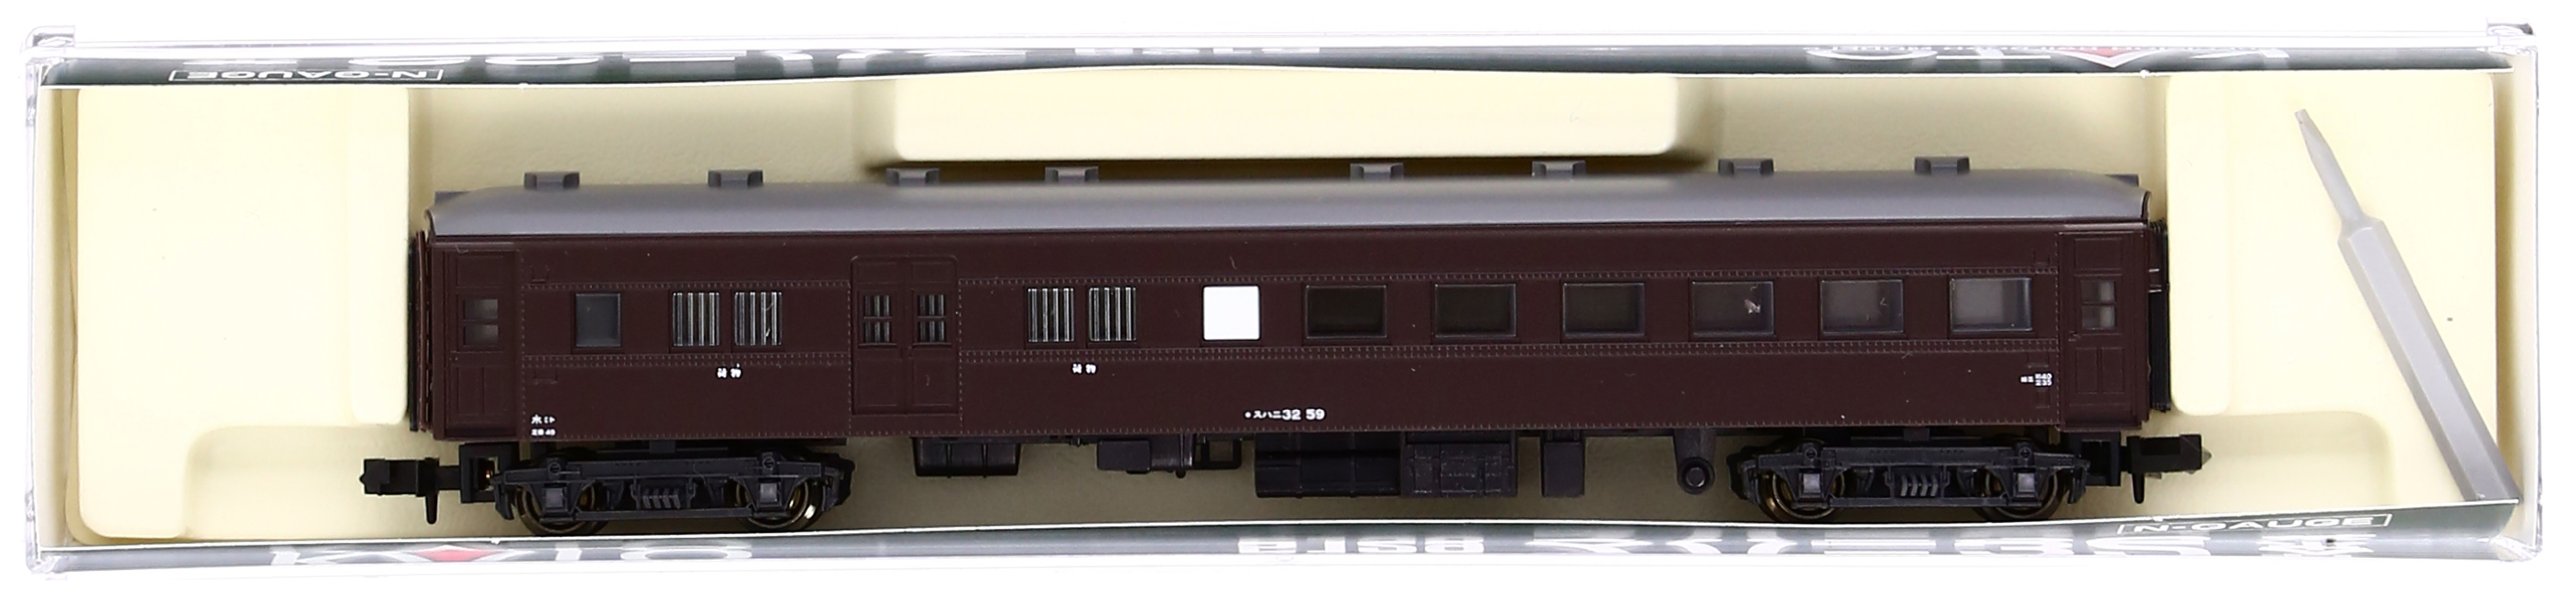 Kato N Gauge Suhani 32 Brown 5129 Model Railway Passenger Car